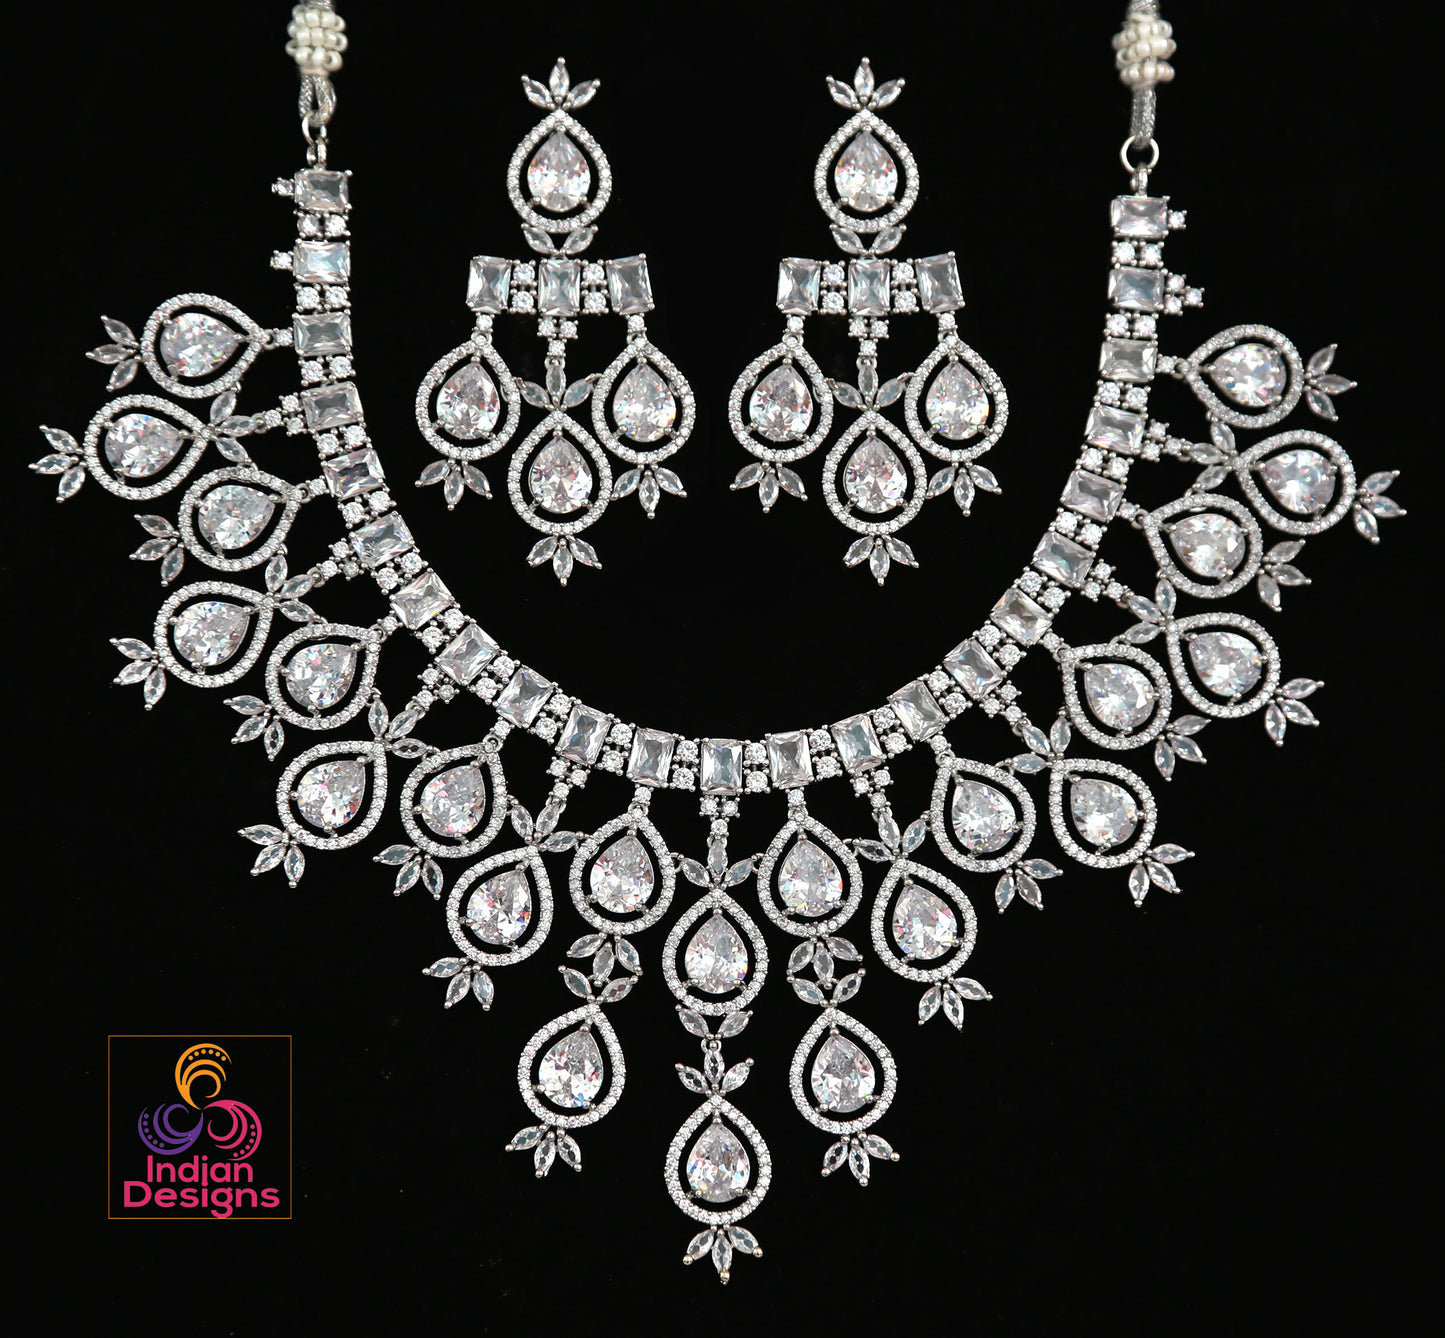 Silver American Diamond Necklace with White CZ Tear Drop stones|Indian Jewelry|Pakistani Wedding choker|Bollywood fashion|Punjabi Wedding jewelry|Indian Bride USA